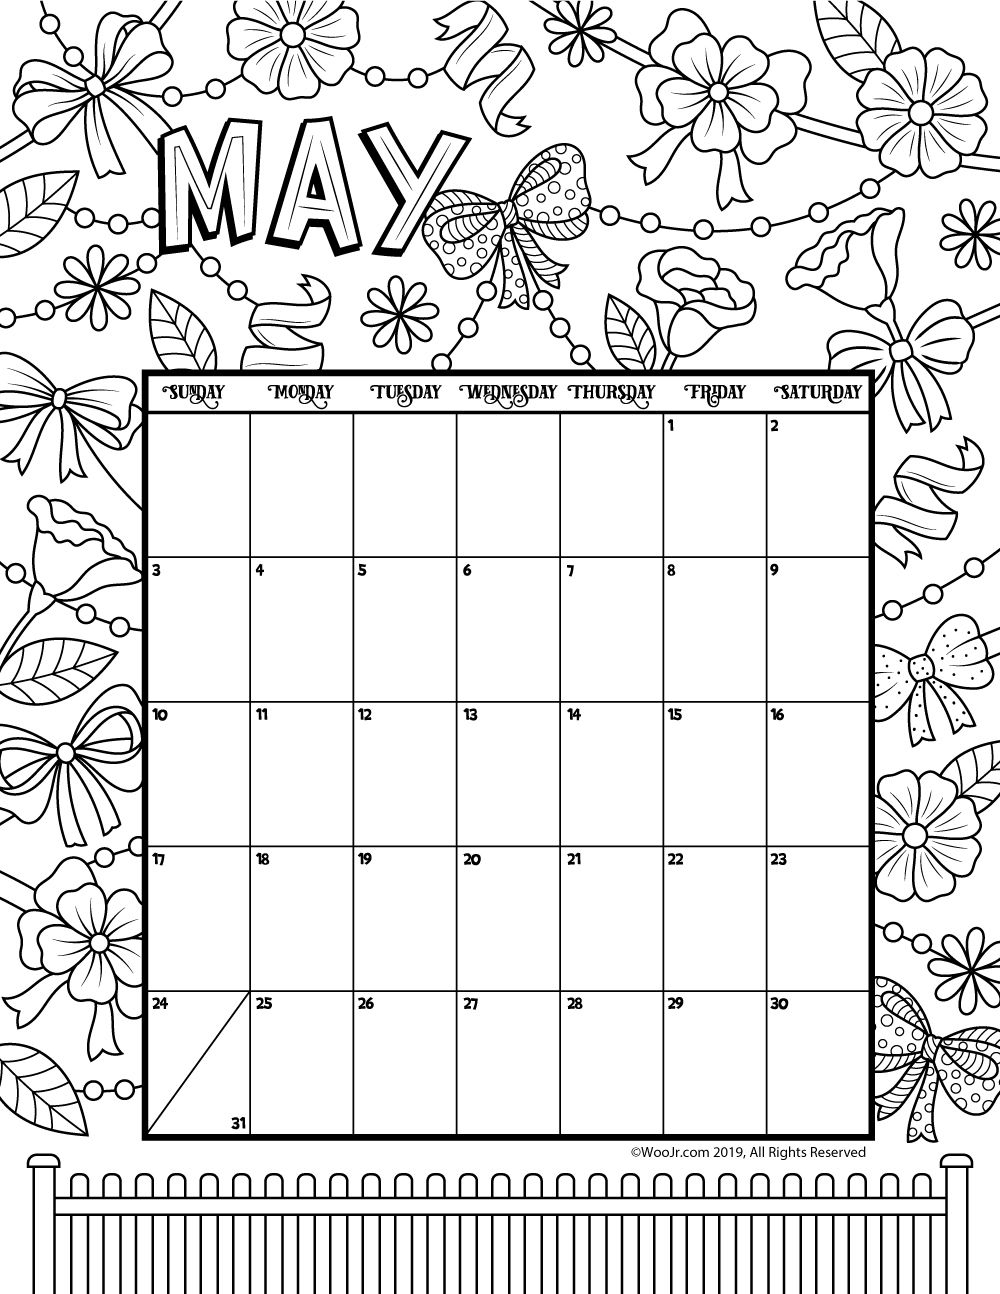 May 2020 Coloring Calendar | Woo! Jr. Kids Activities